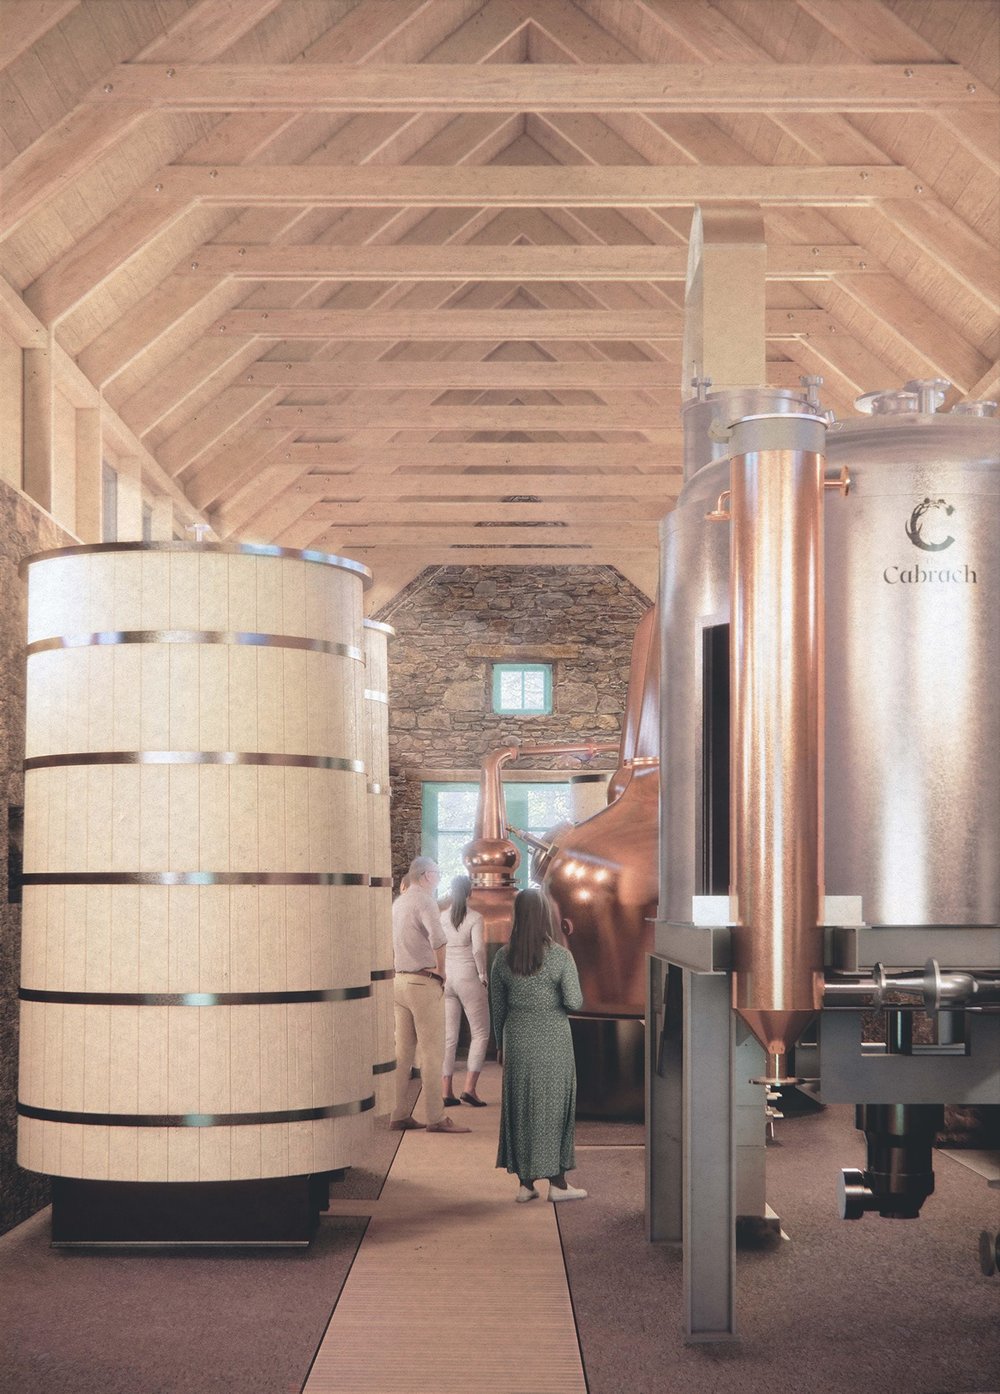 The Cabrach Distillery - Credit Collective Architecture.jpg